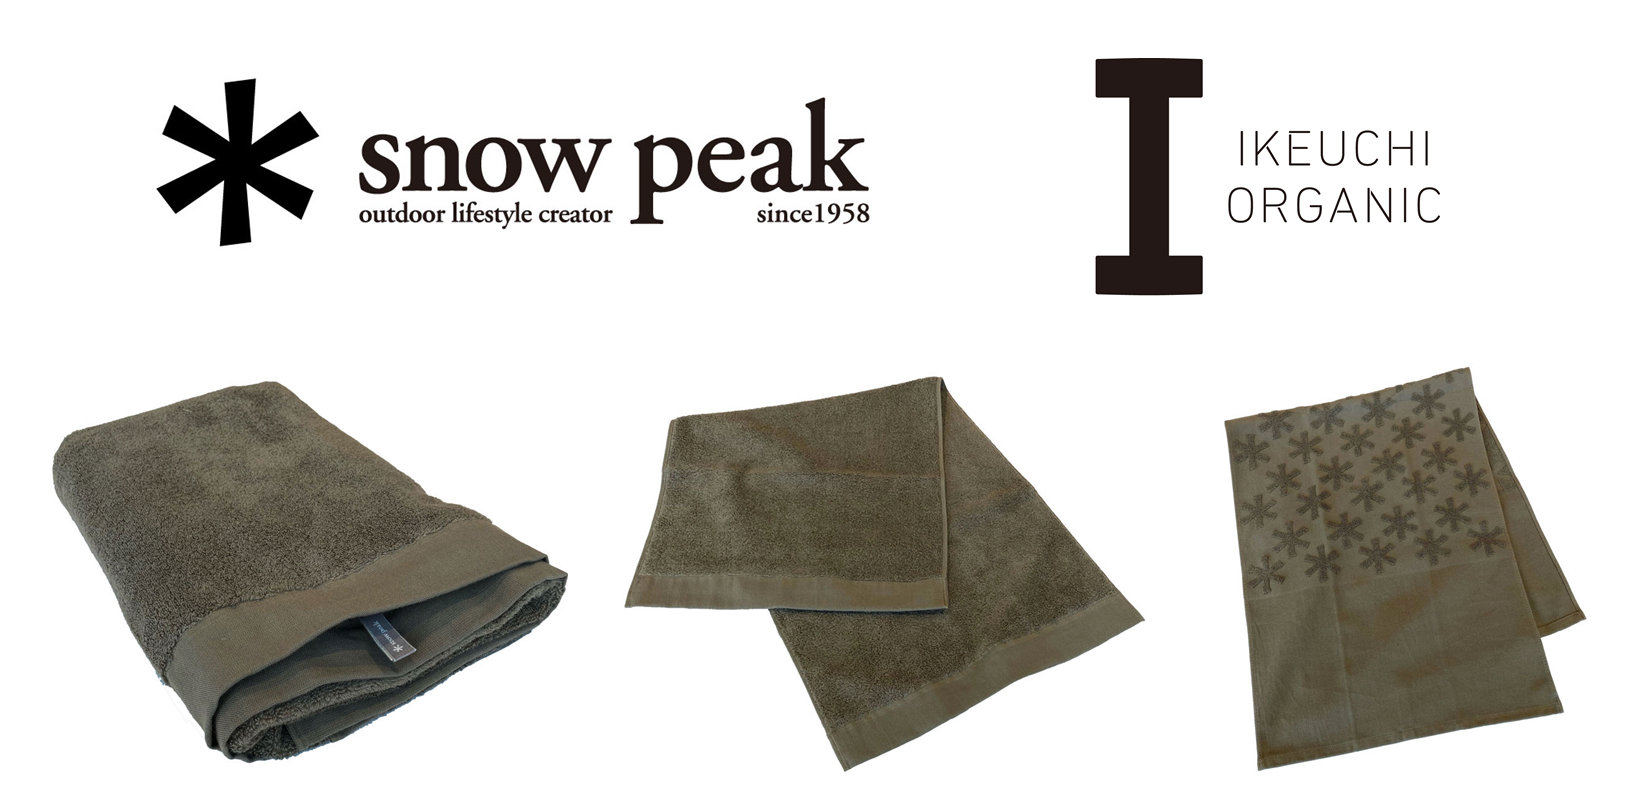 Snow Peak x IKEUCHI ORGANIC Collaboration – First release!